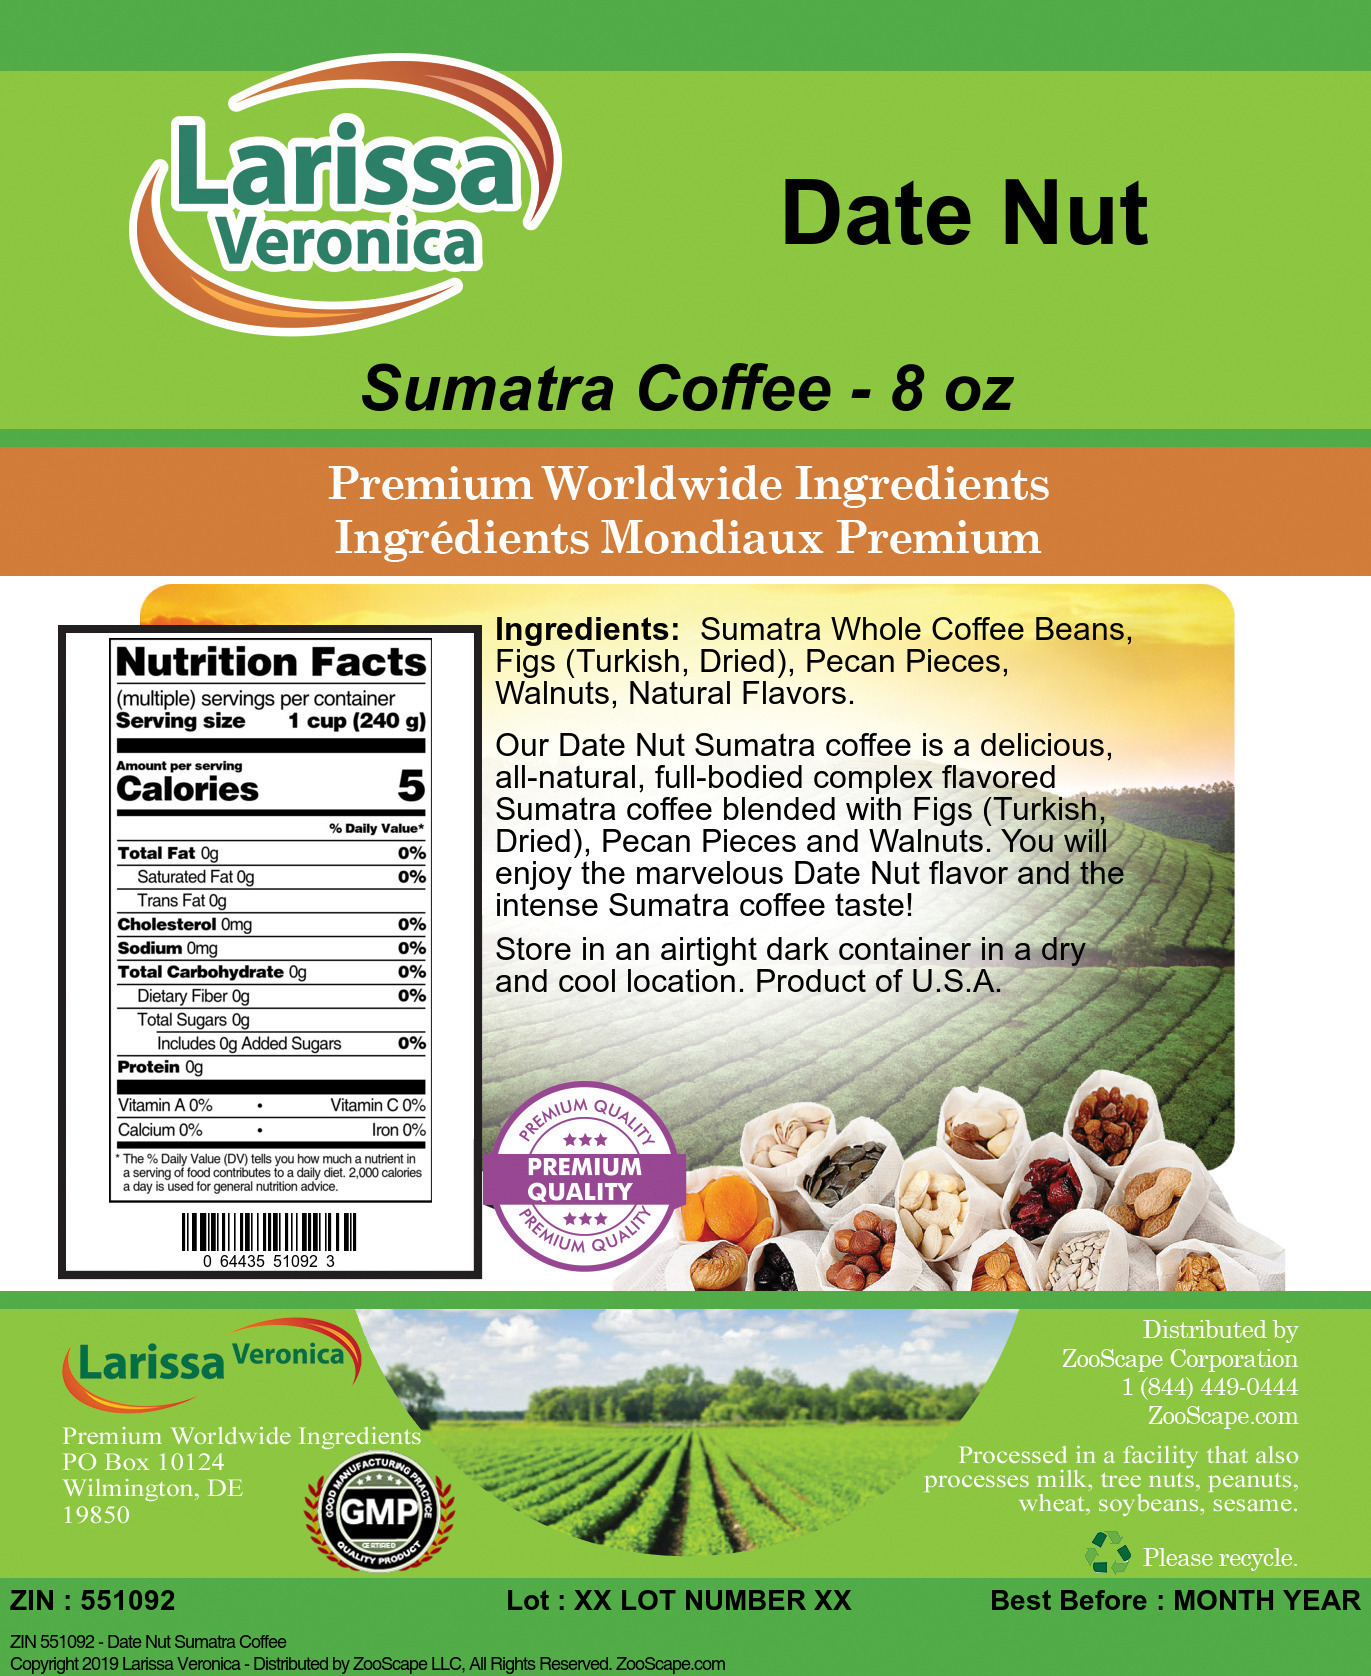 Date Nut Sumatra Coffee - Label